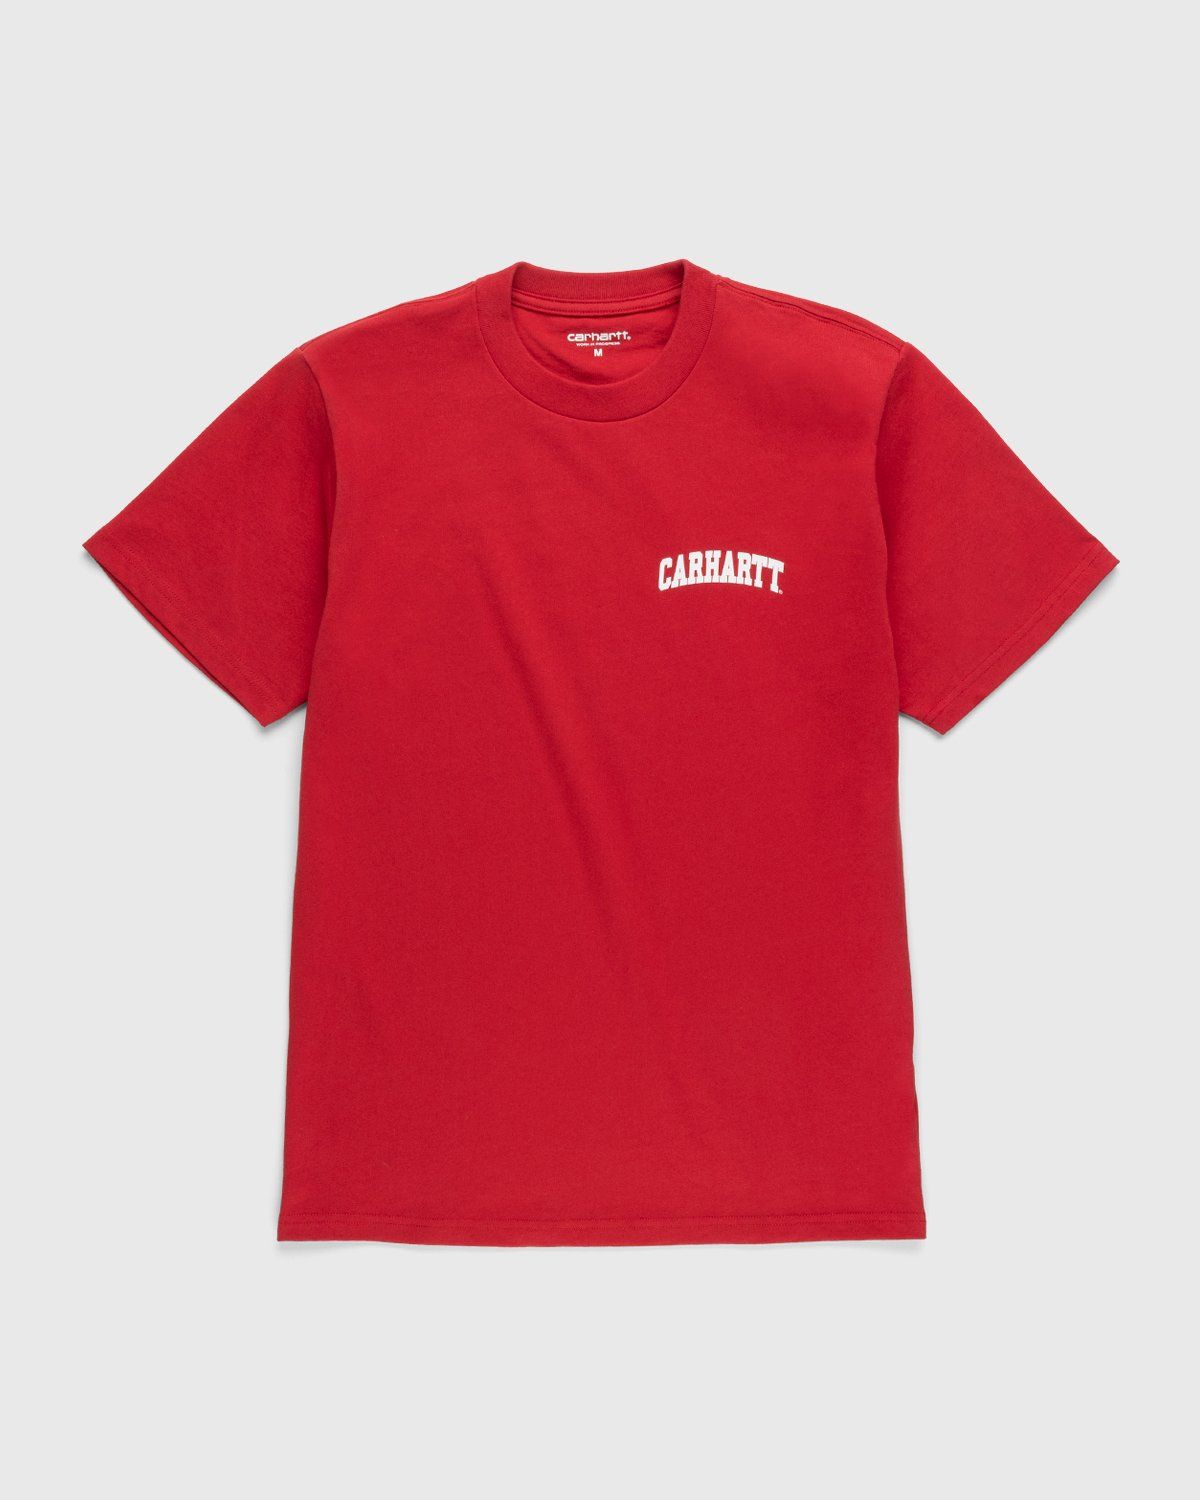 Carhartt WIP – University Script T-Shirt Cornel White - T-Shirts - Red - Image 1